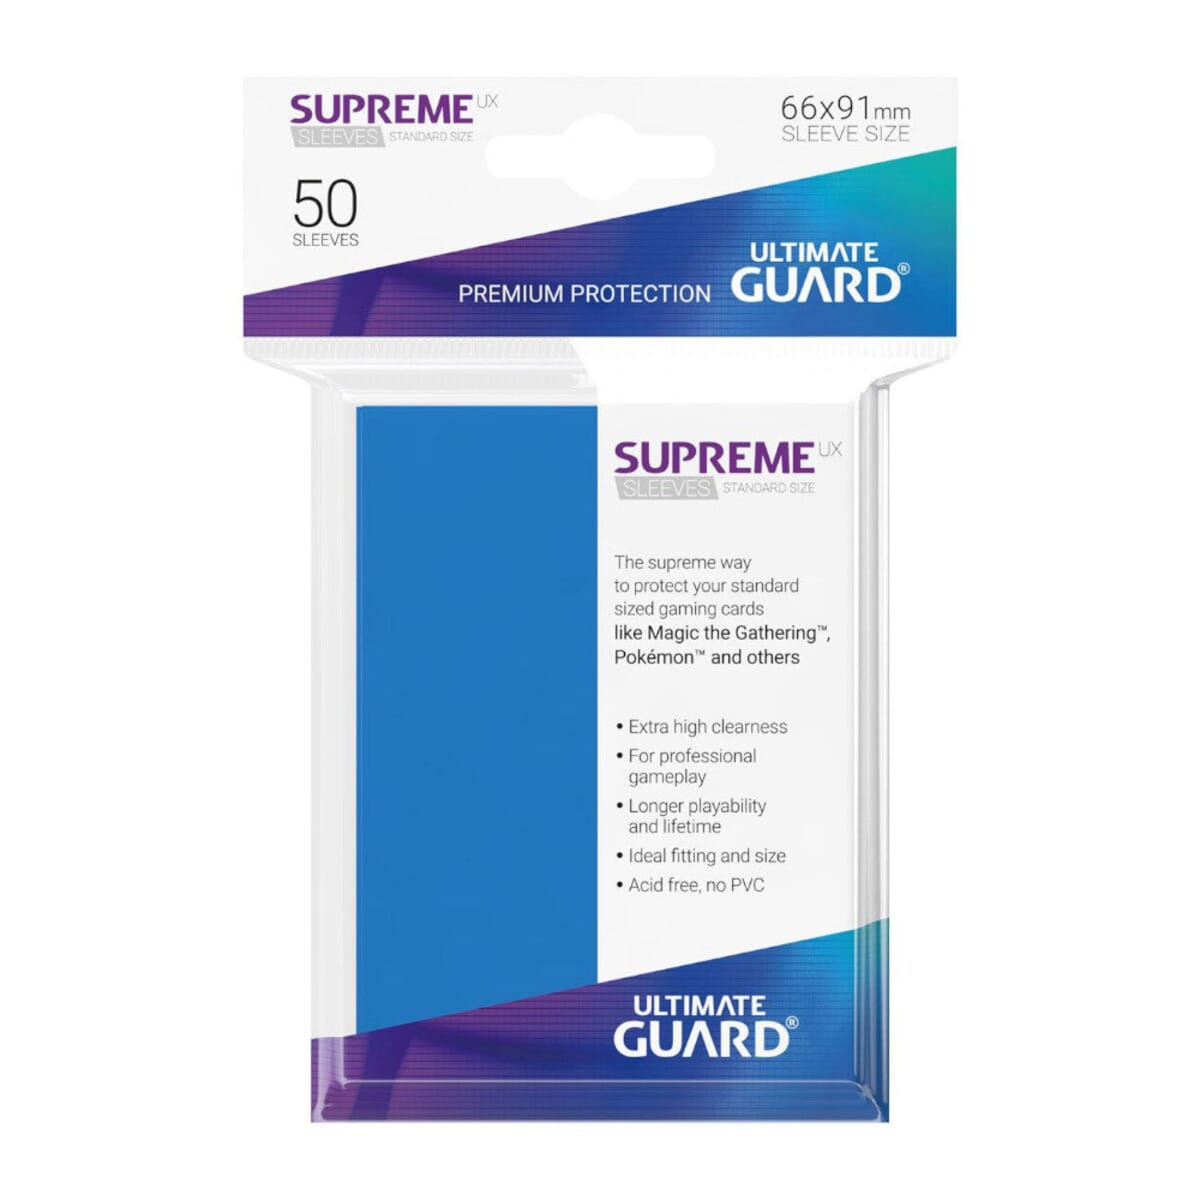 ULTIMATE GUARD Standard Supreme 50 Sleeves Size Sammelkarten UX Stück Multicolor